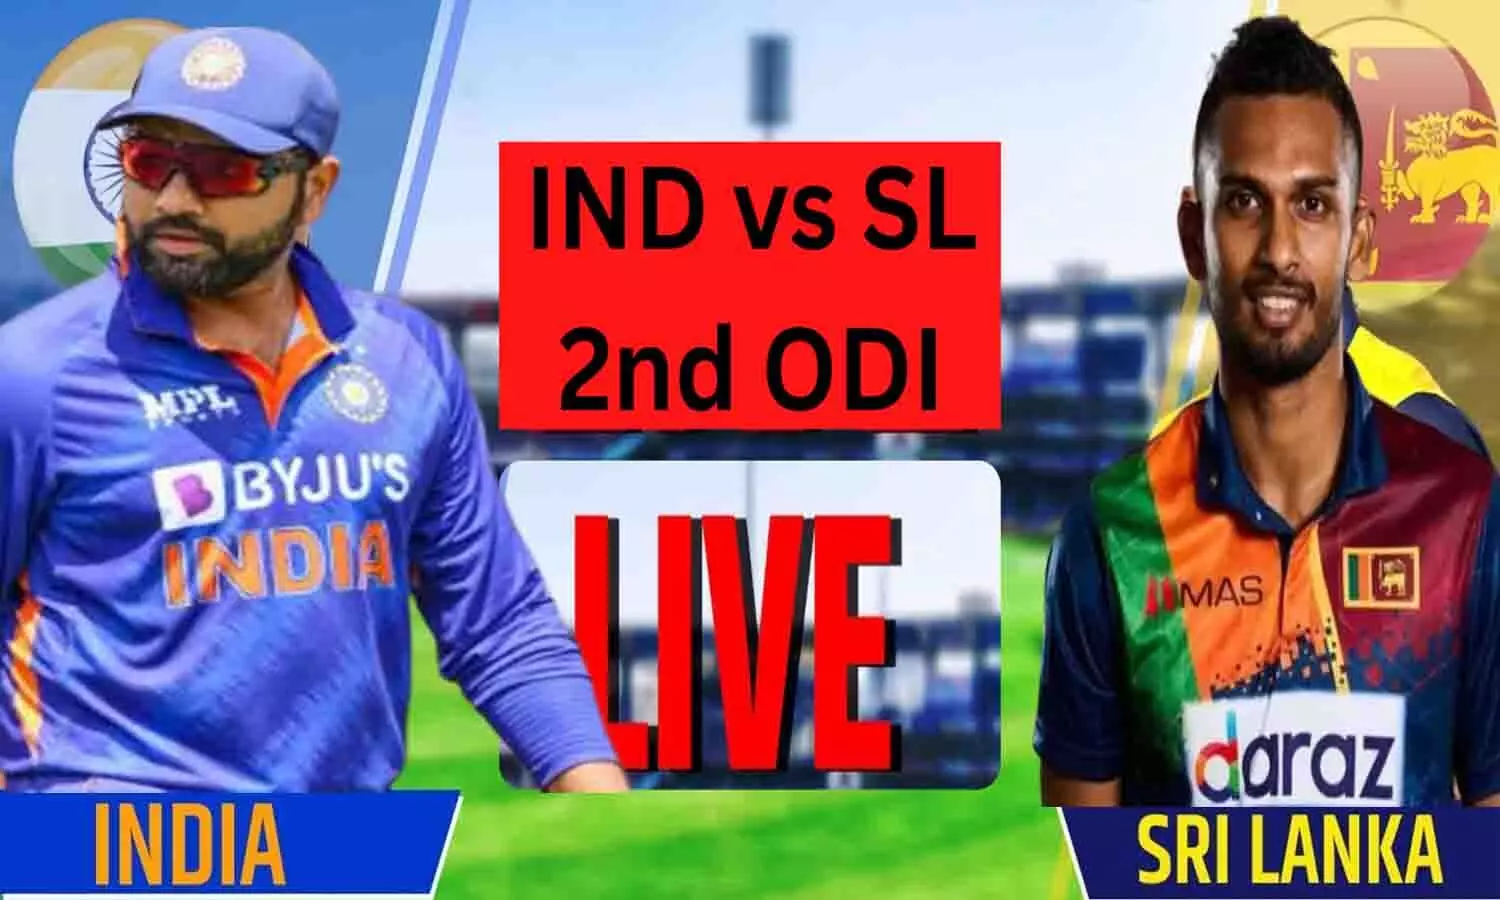 IND vs SL 2nd ODI Live Score